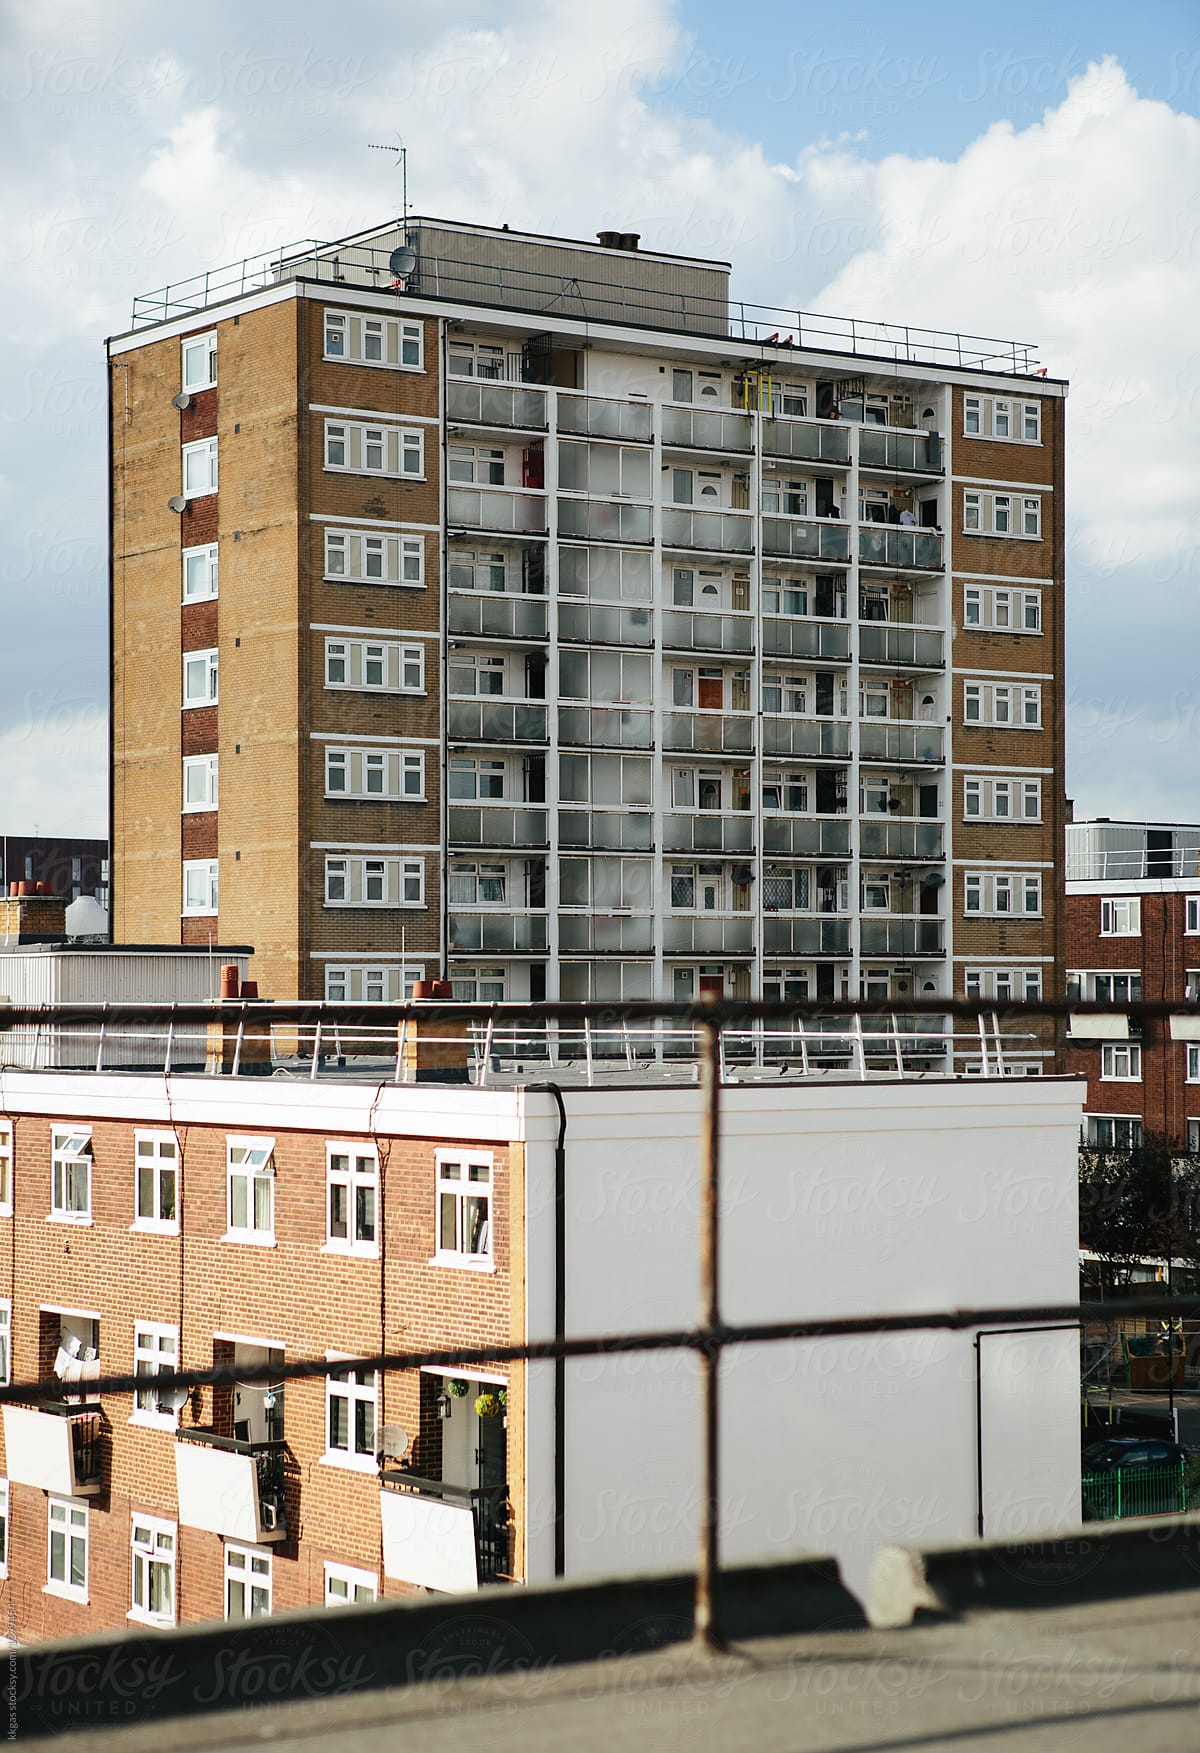 Social housing in London